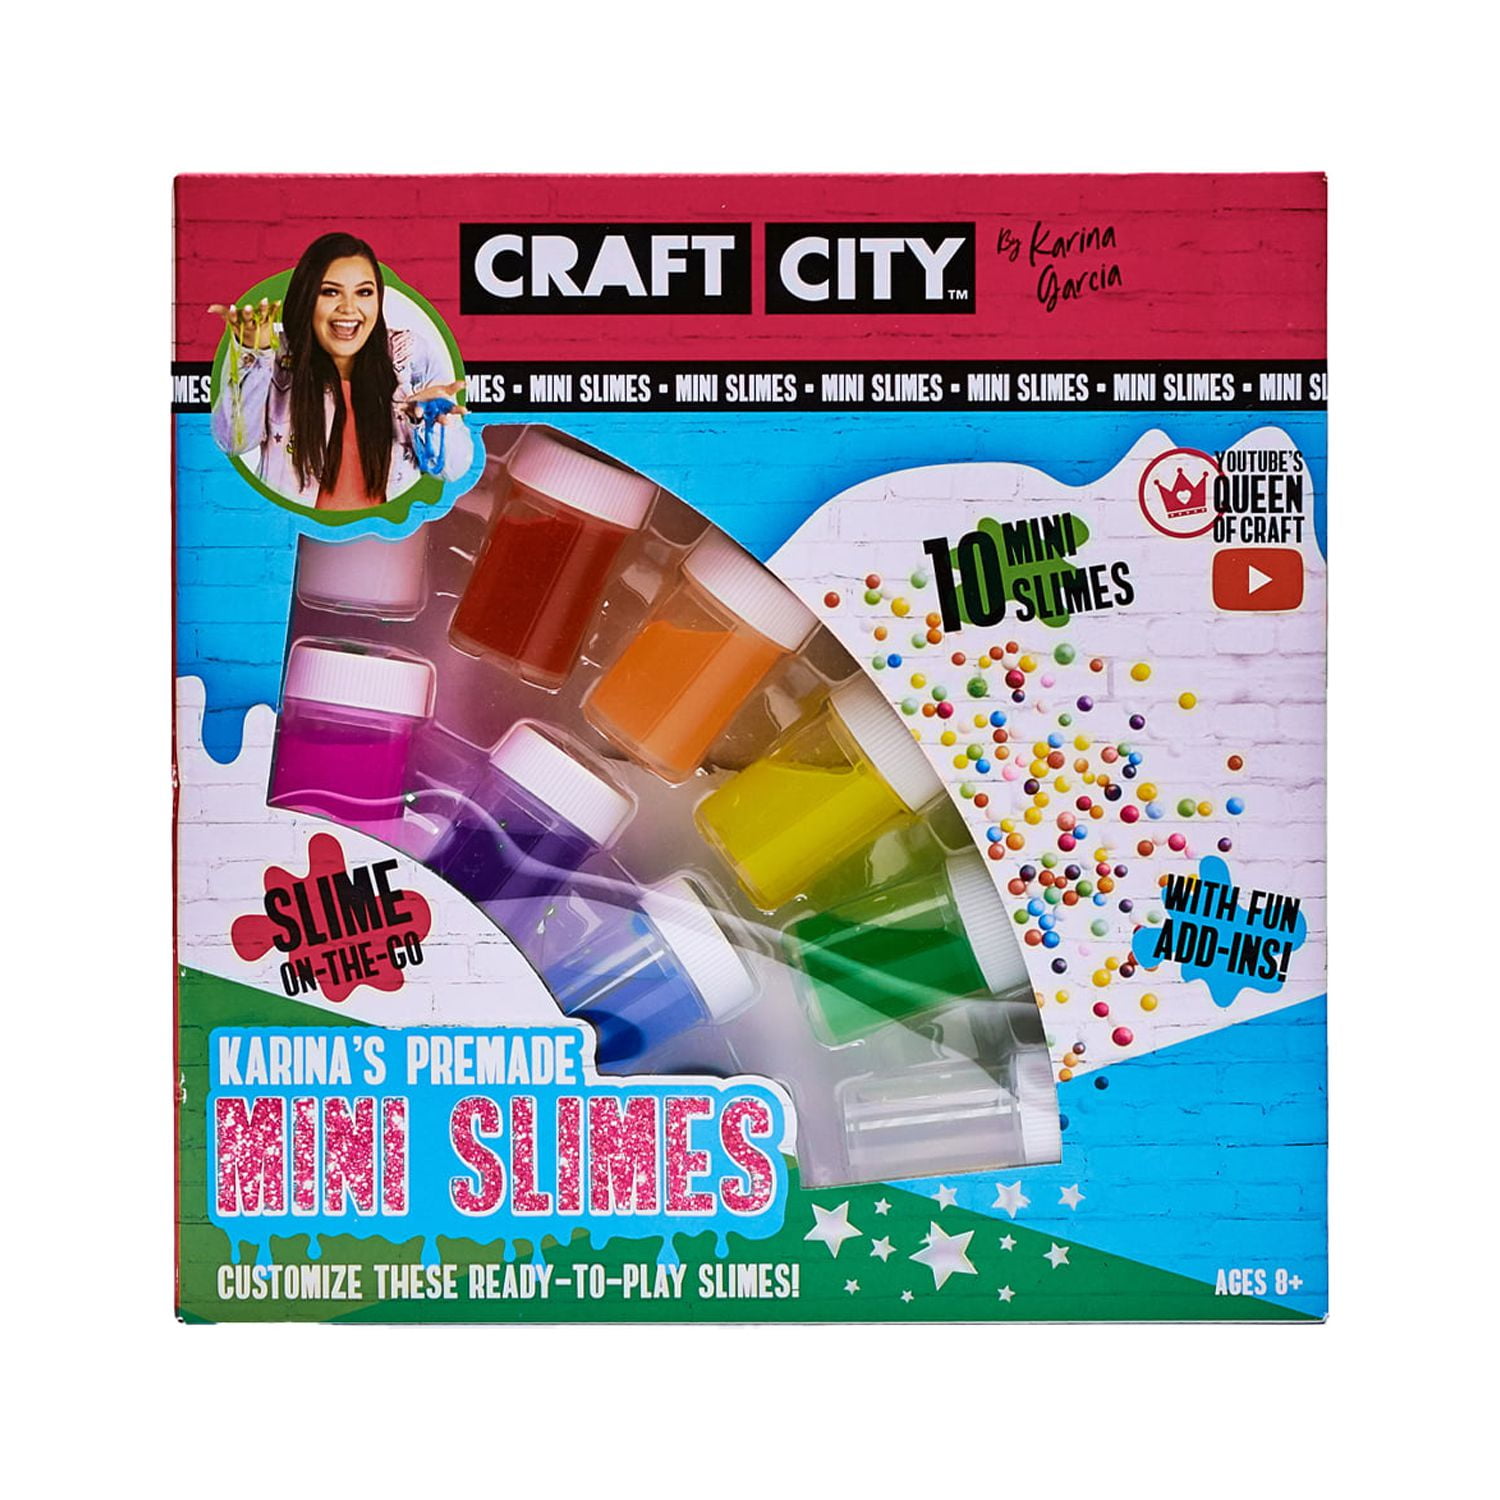 Make Your Own Slime Kit Original Craft City by Karina Garcia 857118007205